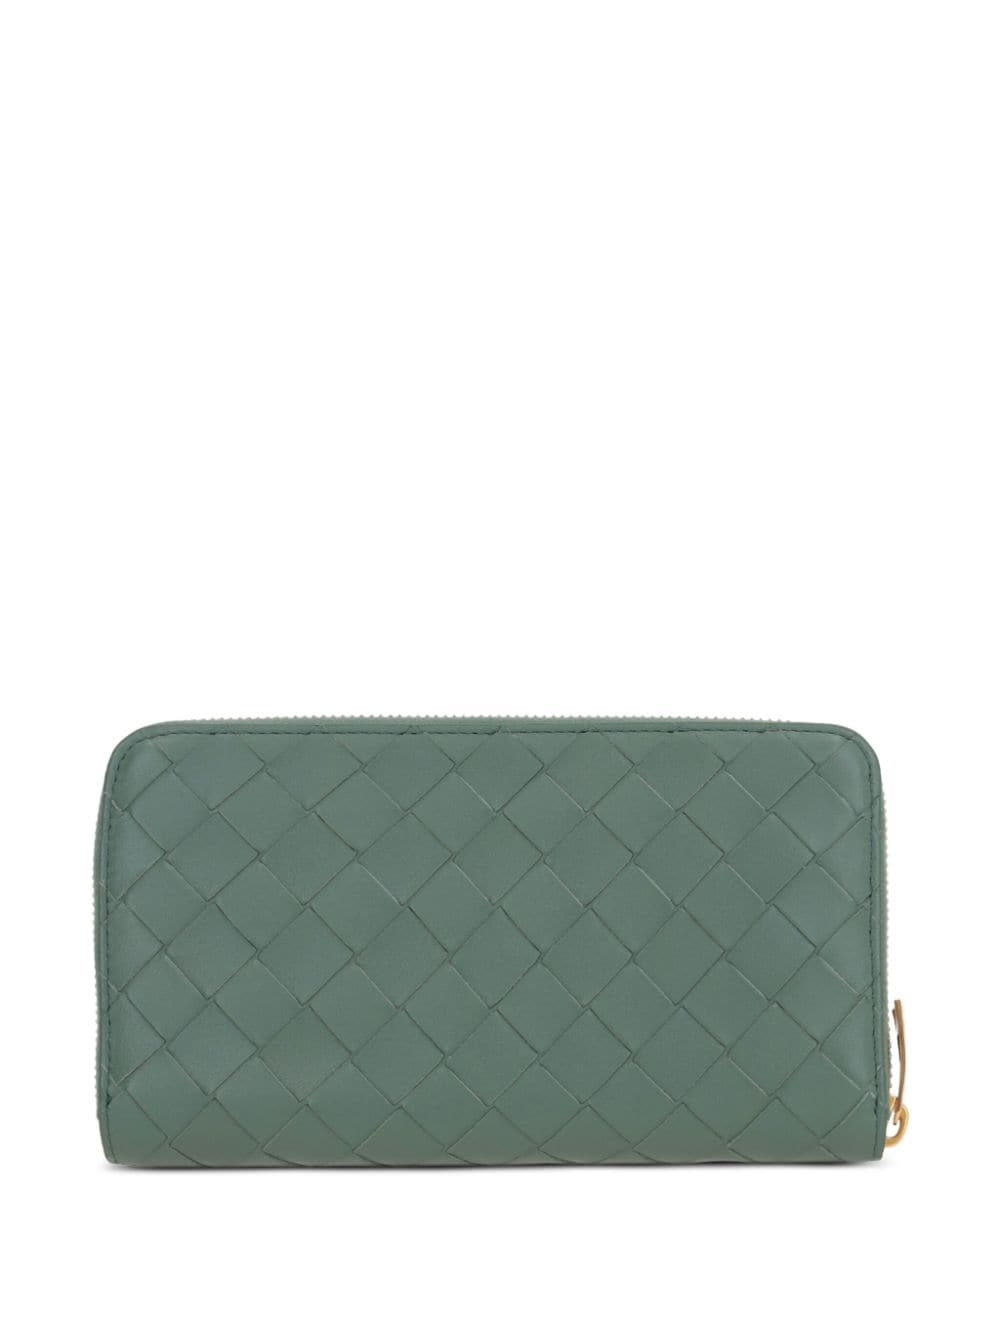 Bottega Veneta Intrecciato zip-around leather wallet - Groen